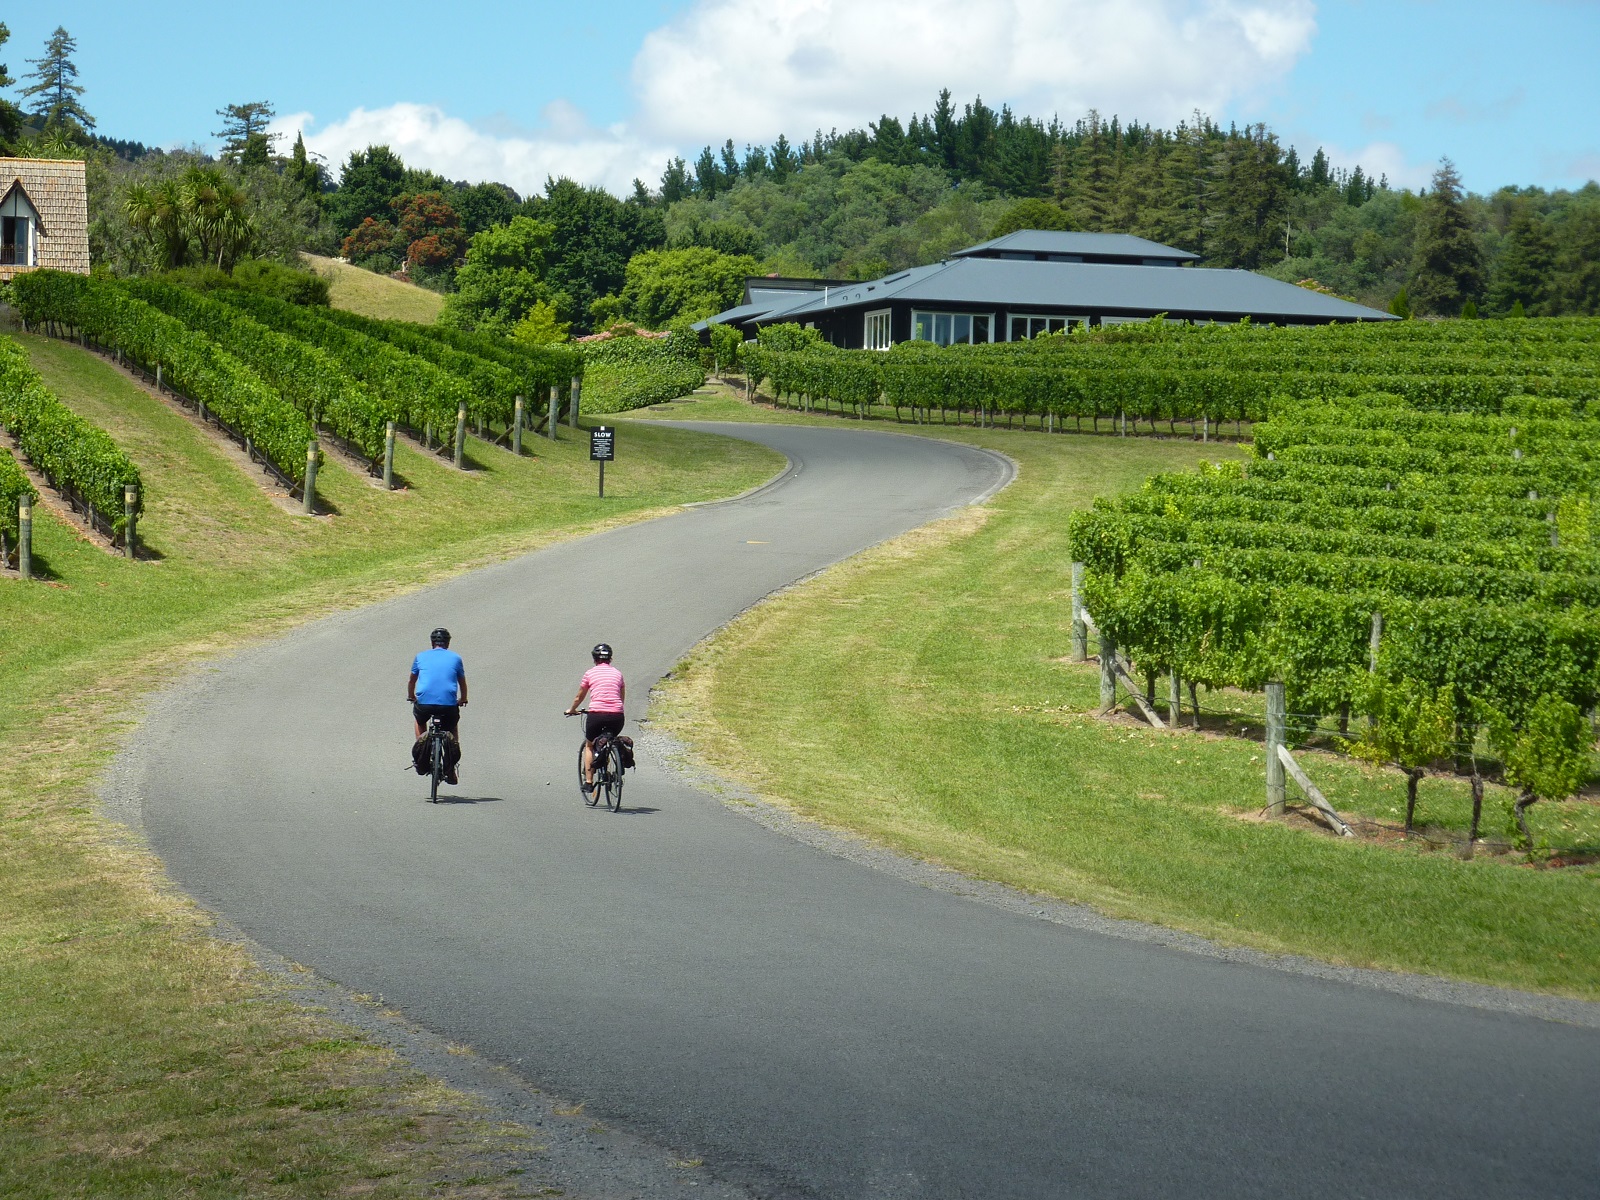 Cyclists biking up the road between the vineyard at Blackbarn, Hawke's Bay